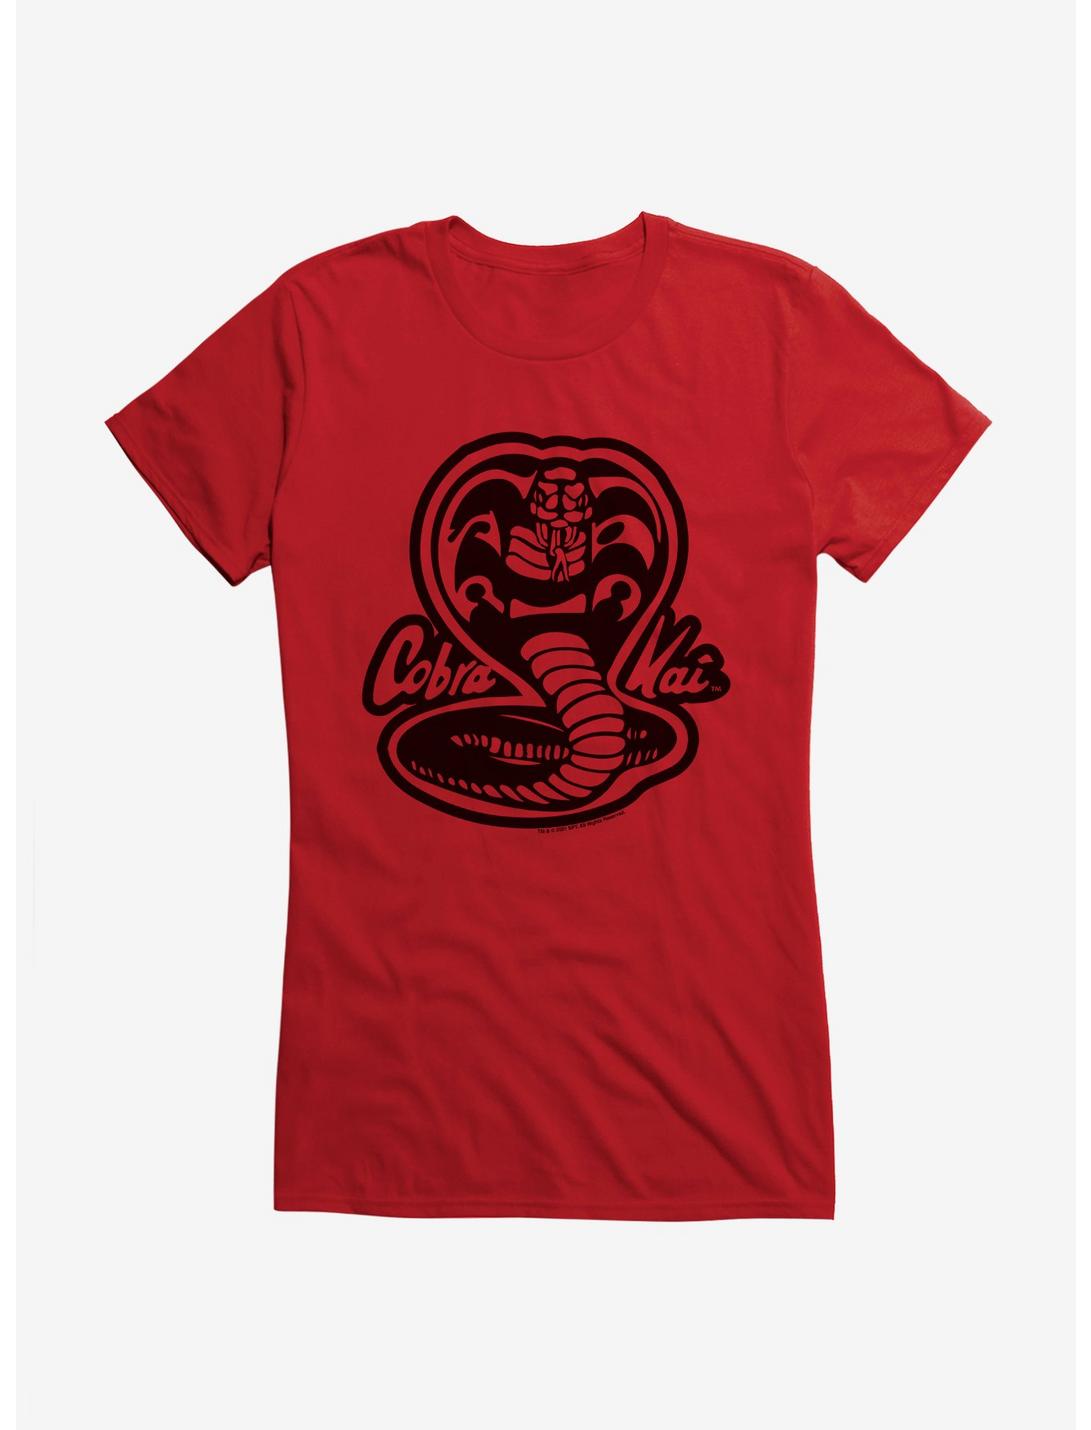 Cobra Kai Black And White Logo Girls T-Shirt, RED, hi-res